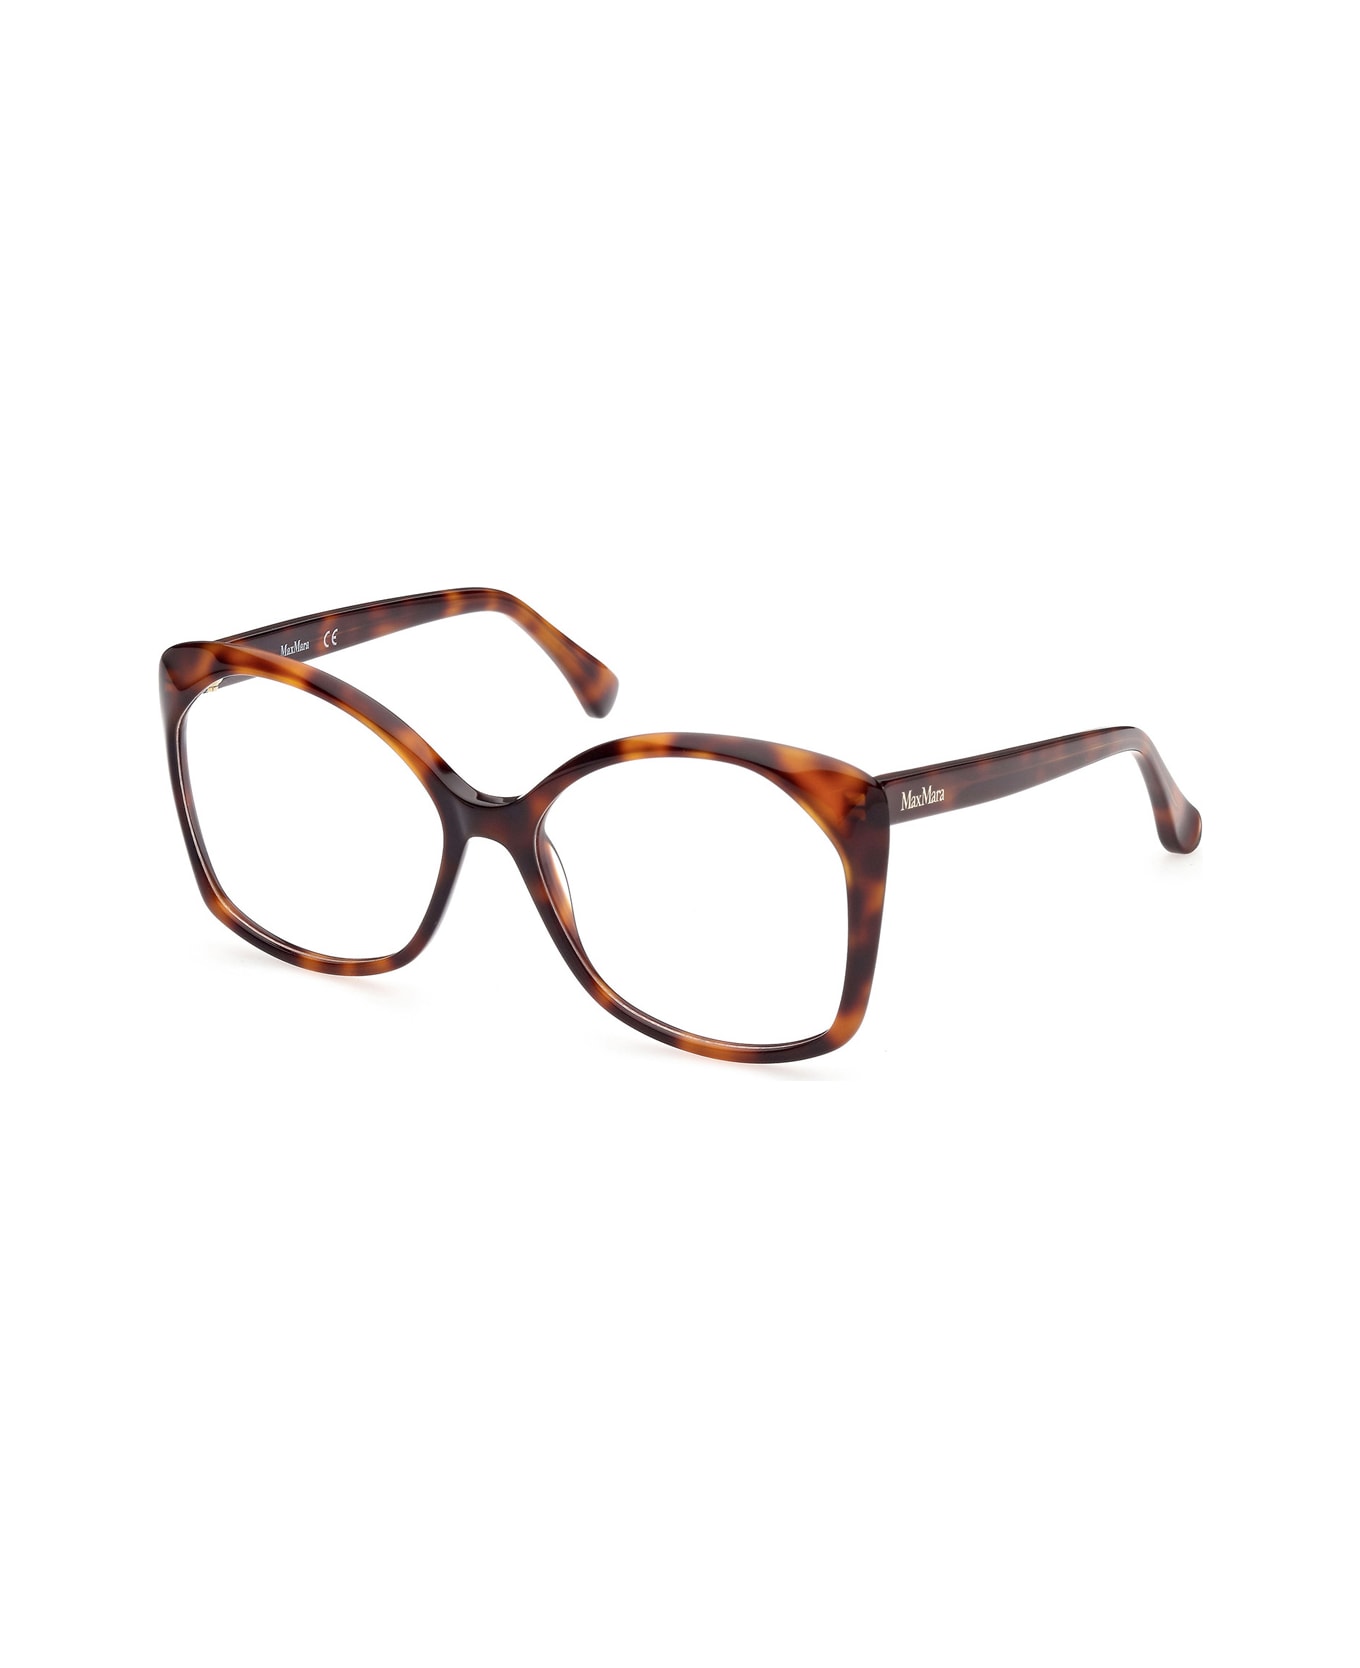 Max Mara Mm5029 Glasses - Marrone アイウェア